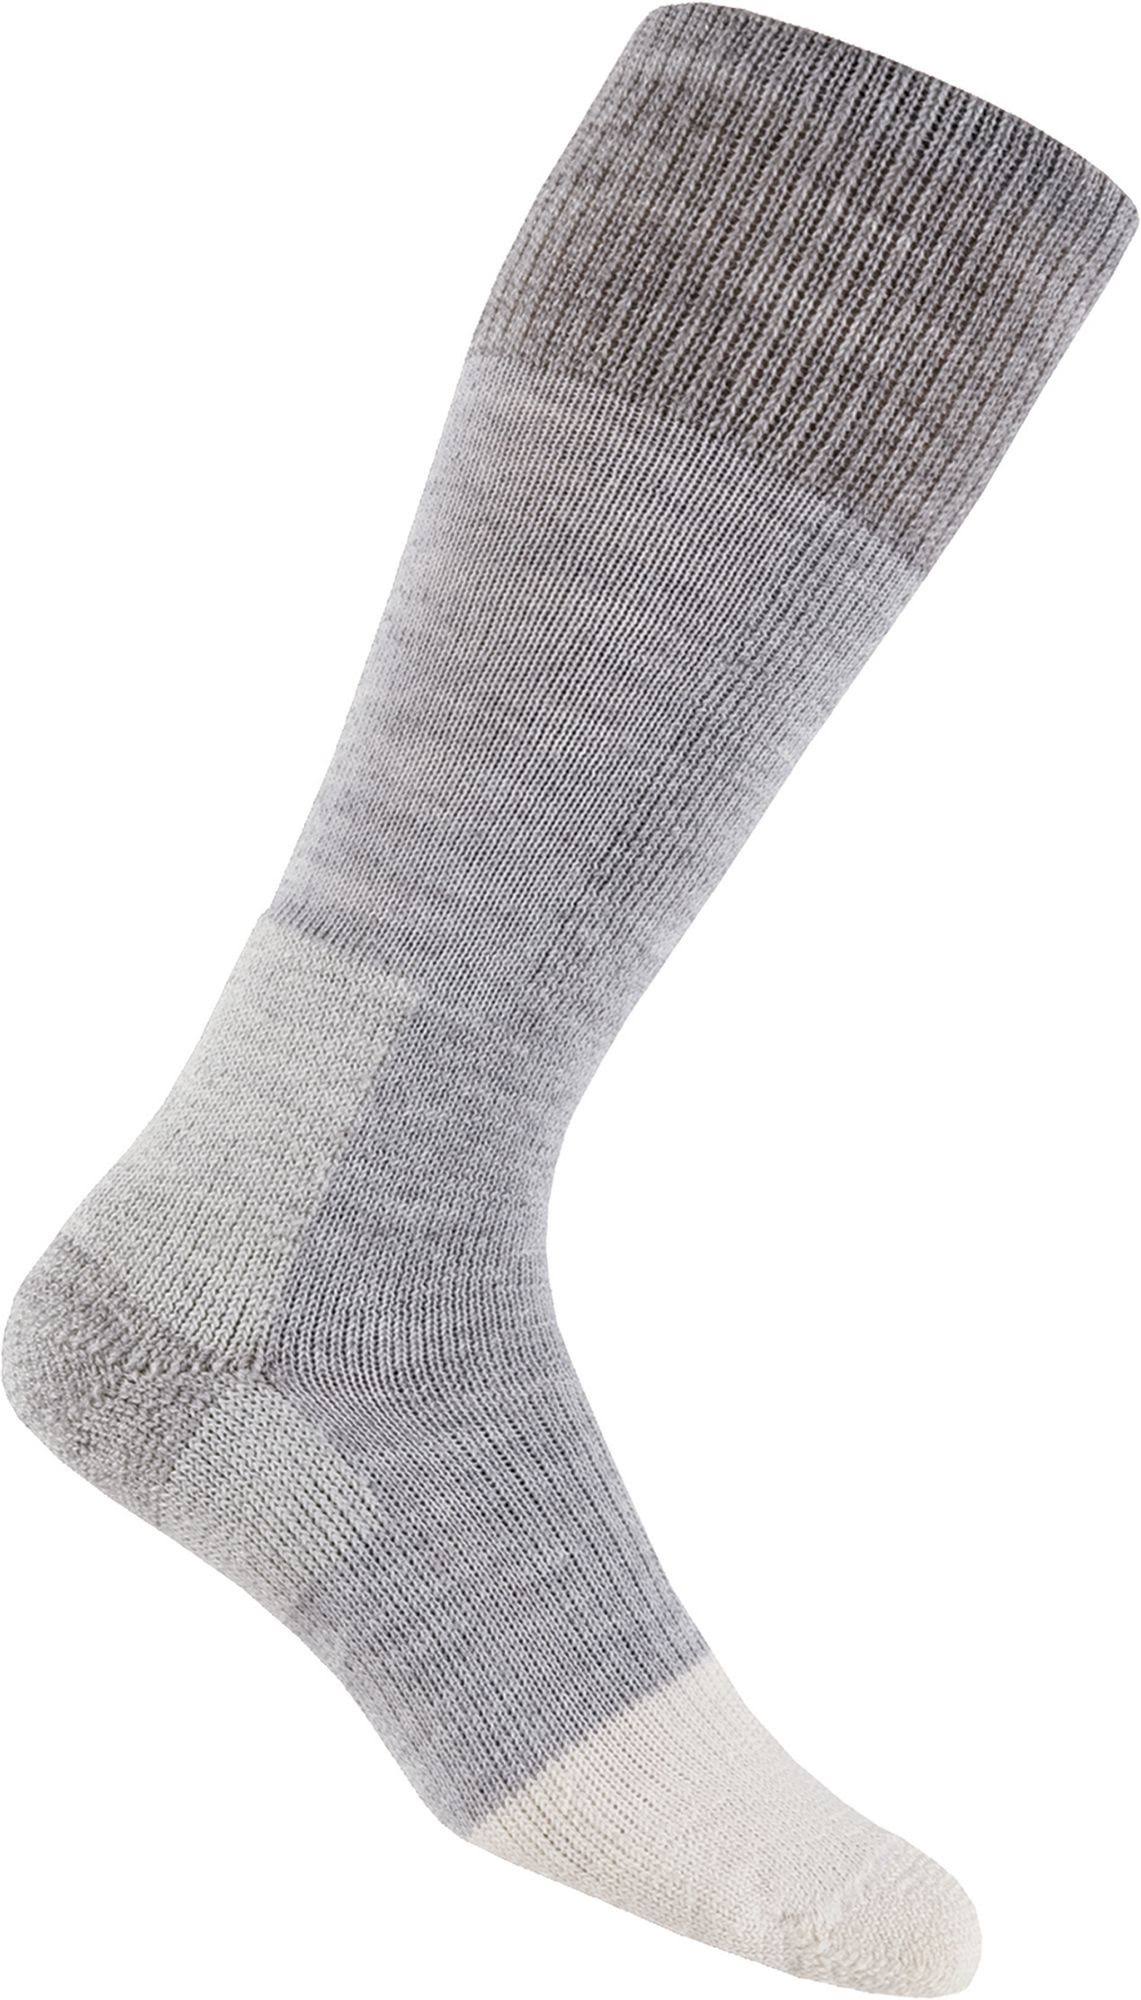 Thorlos Extreme Cold Maximum Cushion Over-Calf Socks, Light Grey, X-Large